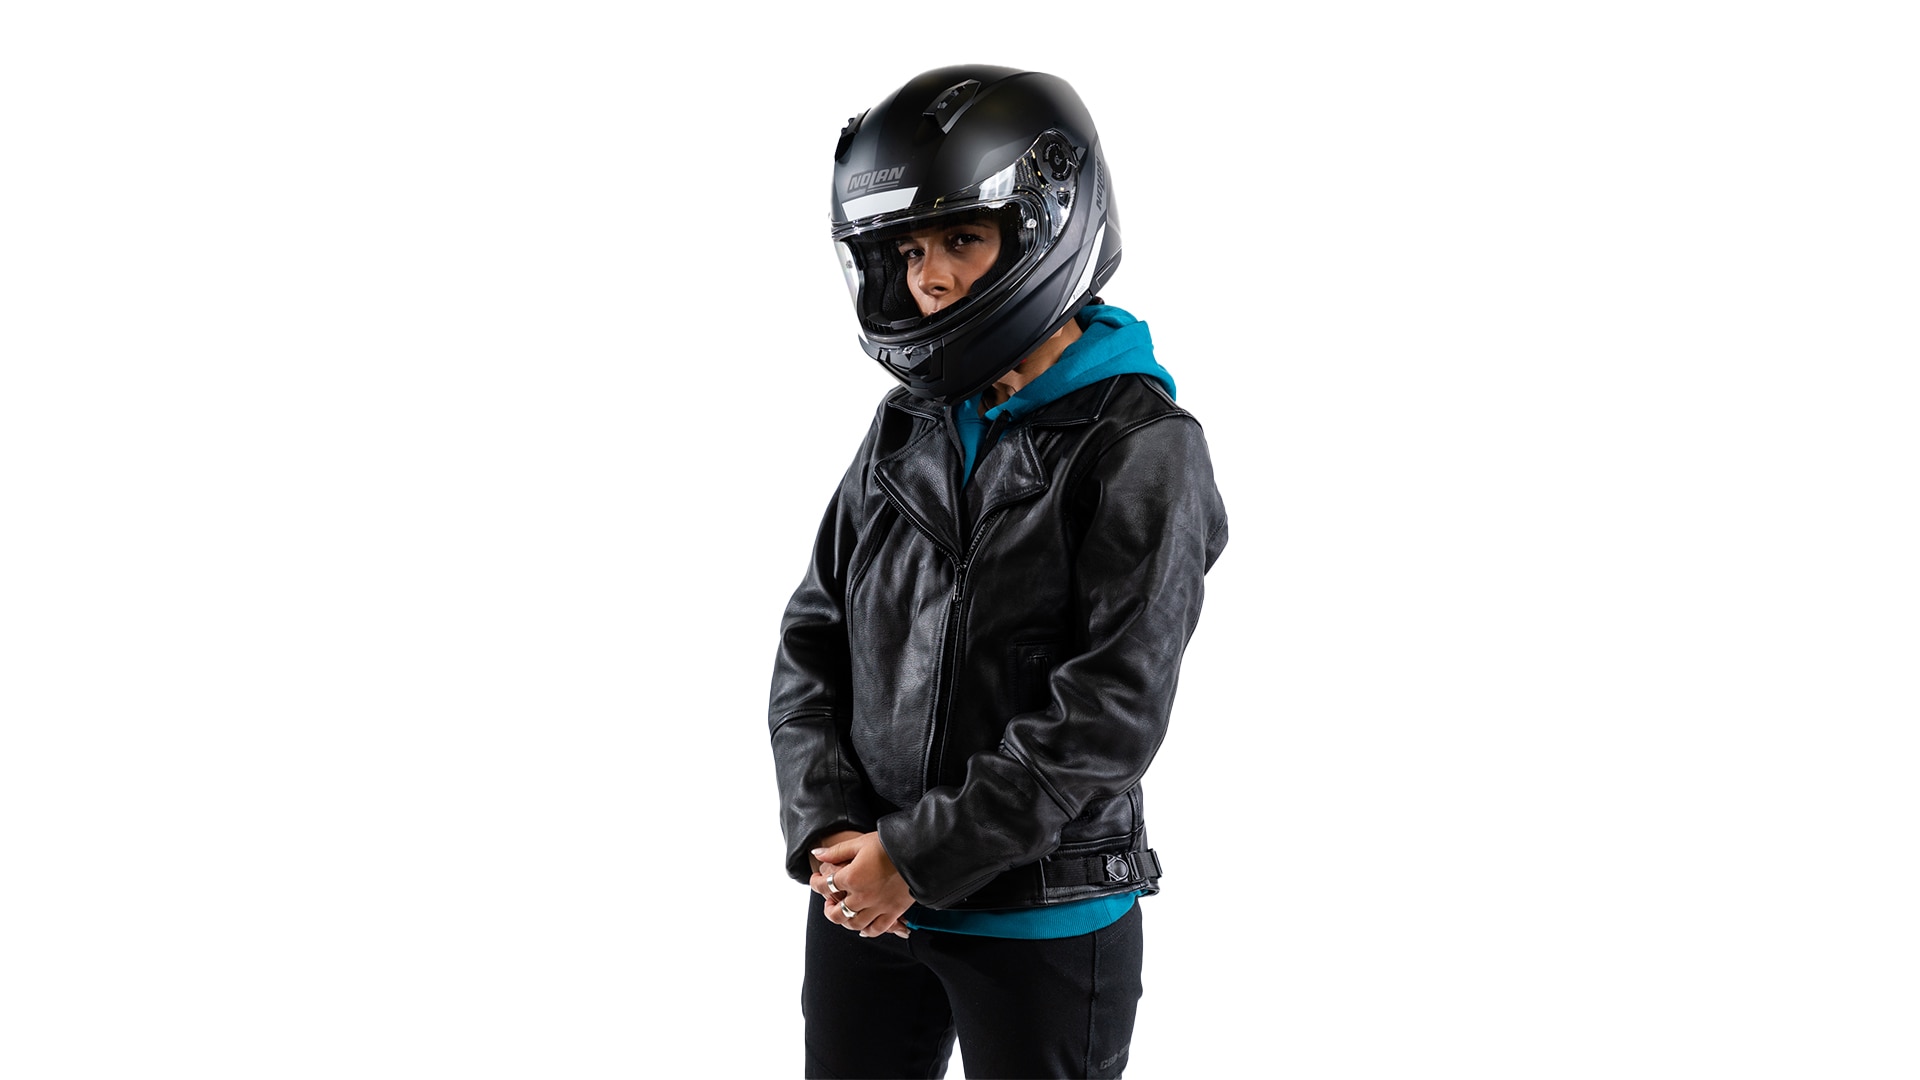 Woman wearing a Nolan helmet nd leather jacket